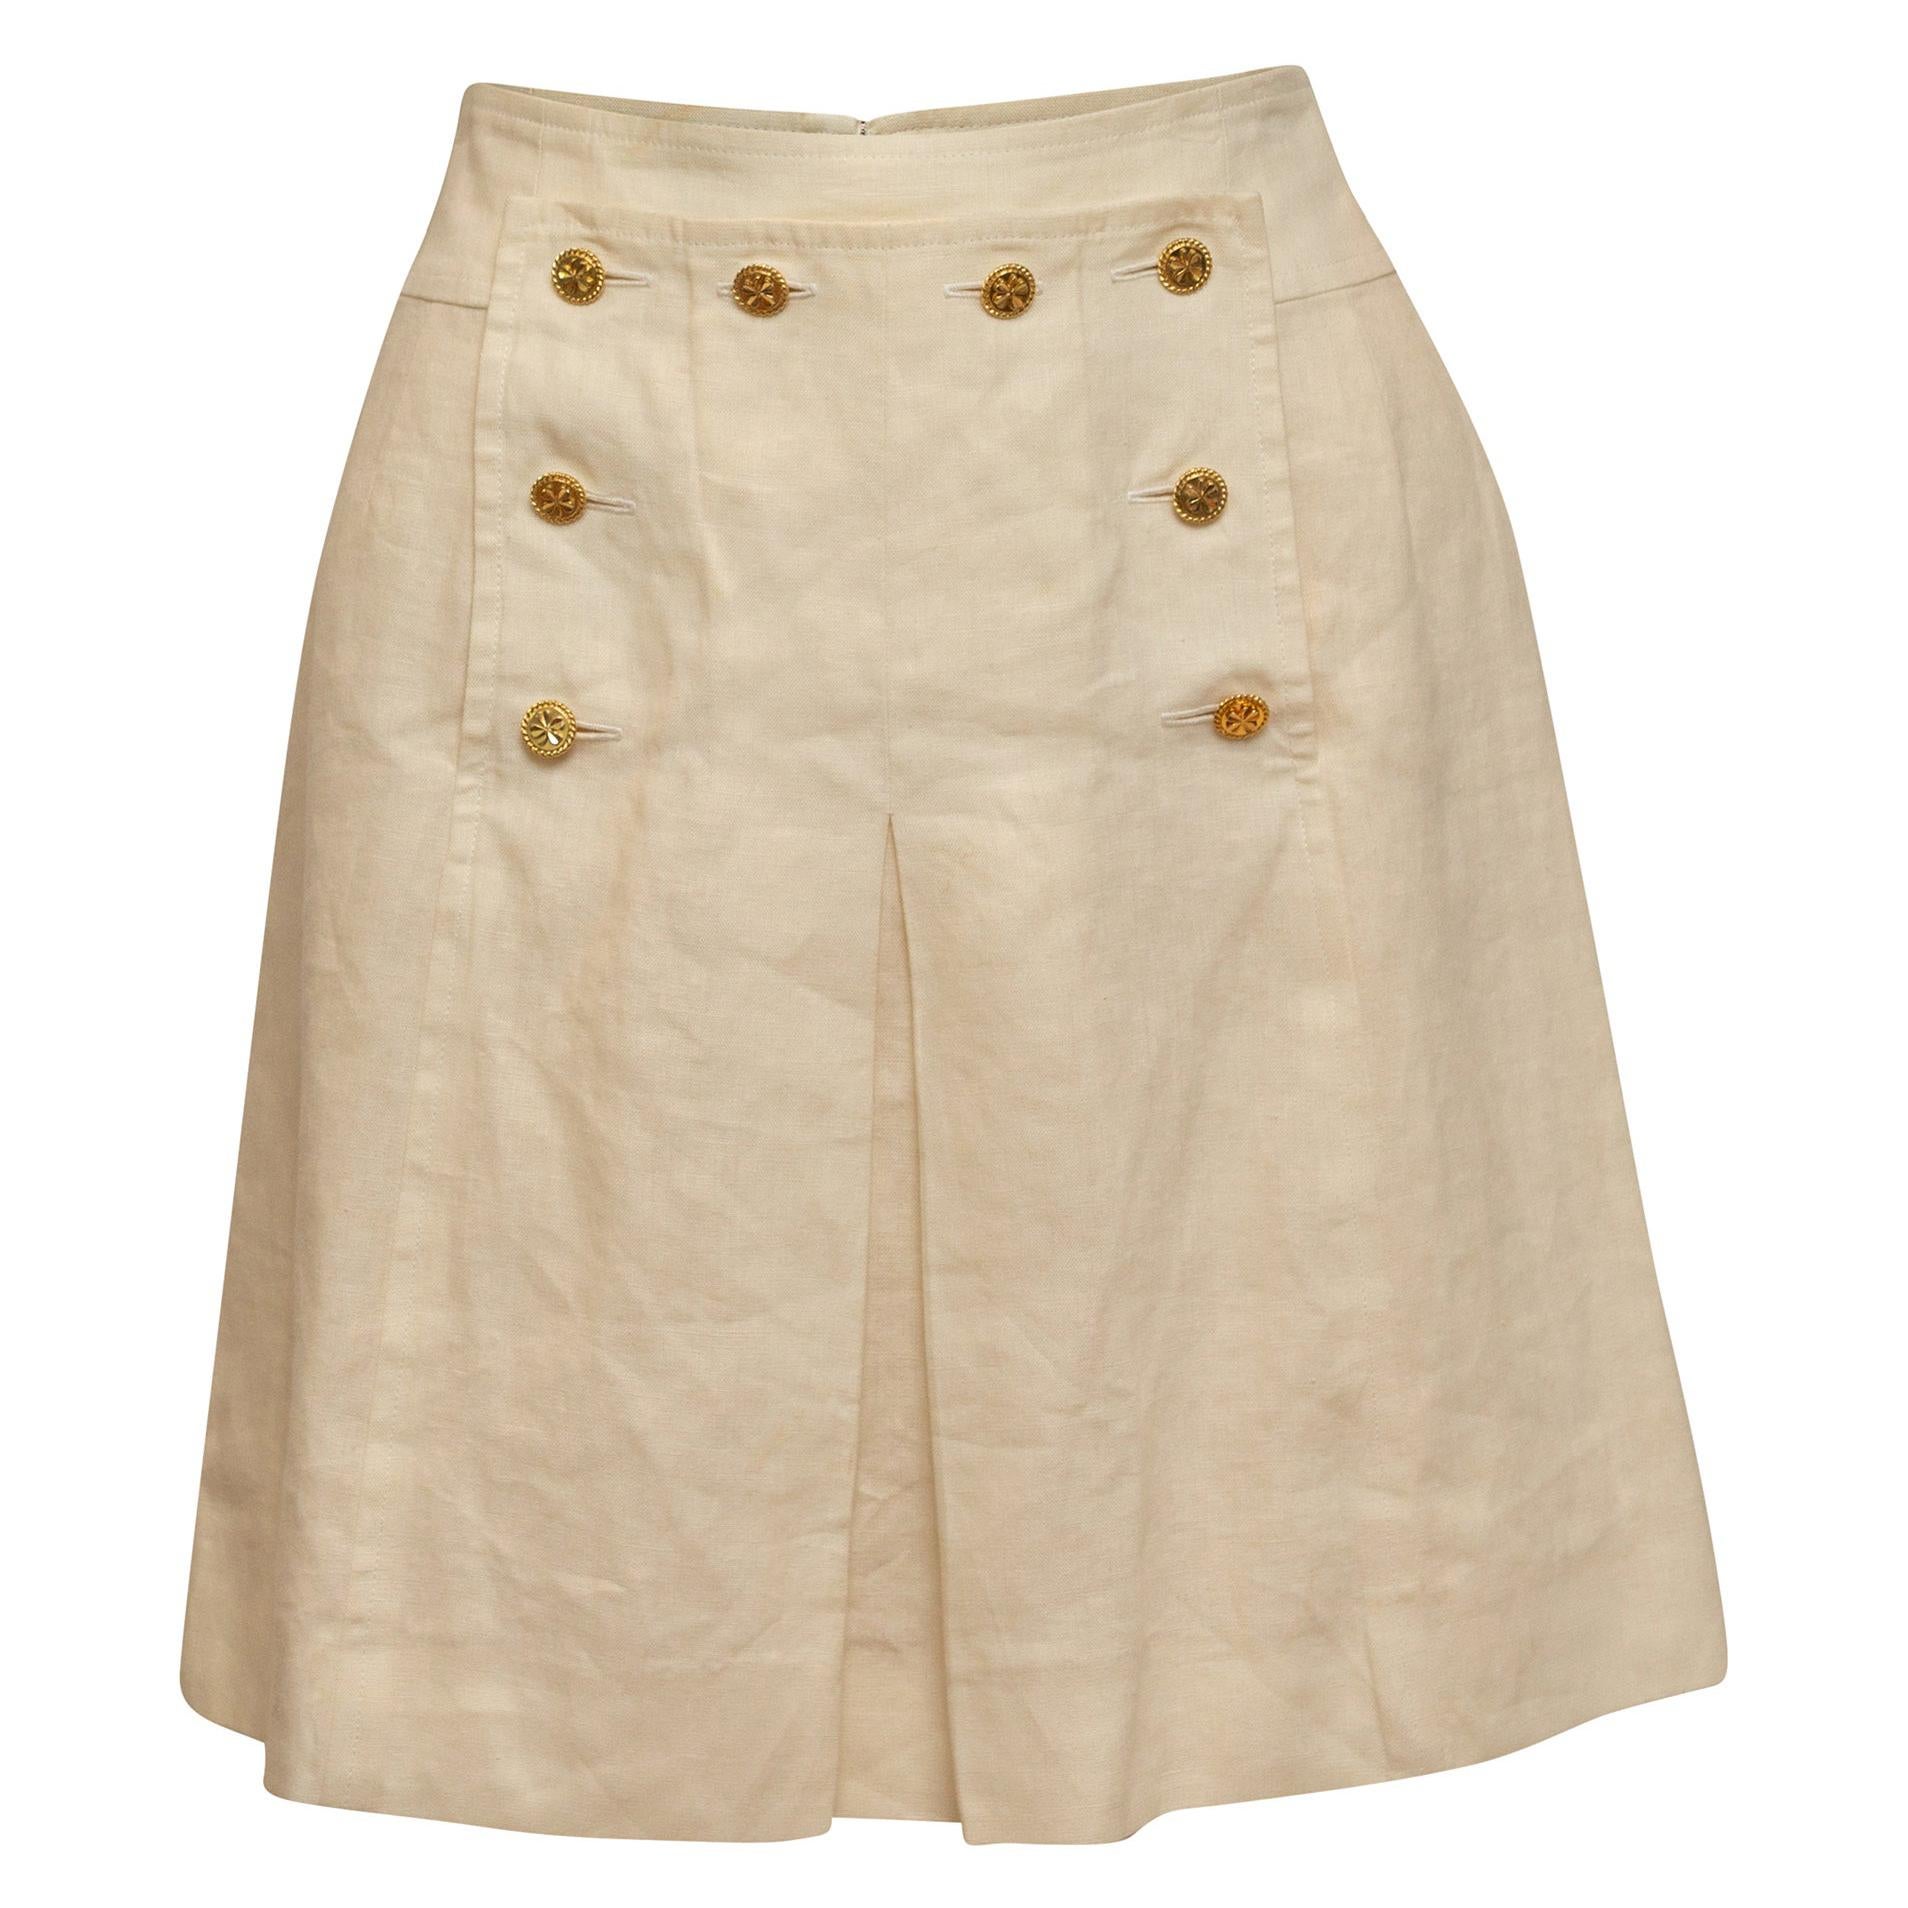 Chanel Boutique White Sailor Skirt